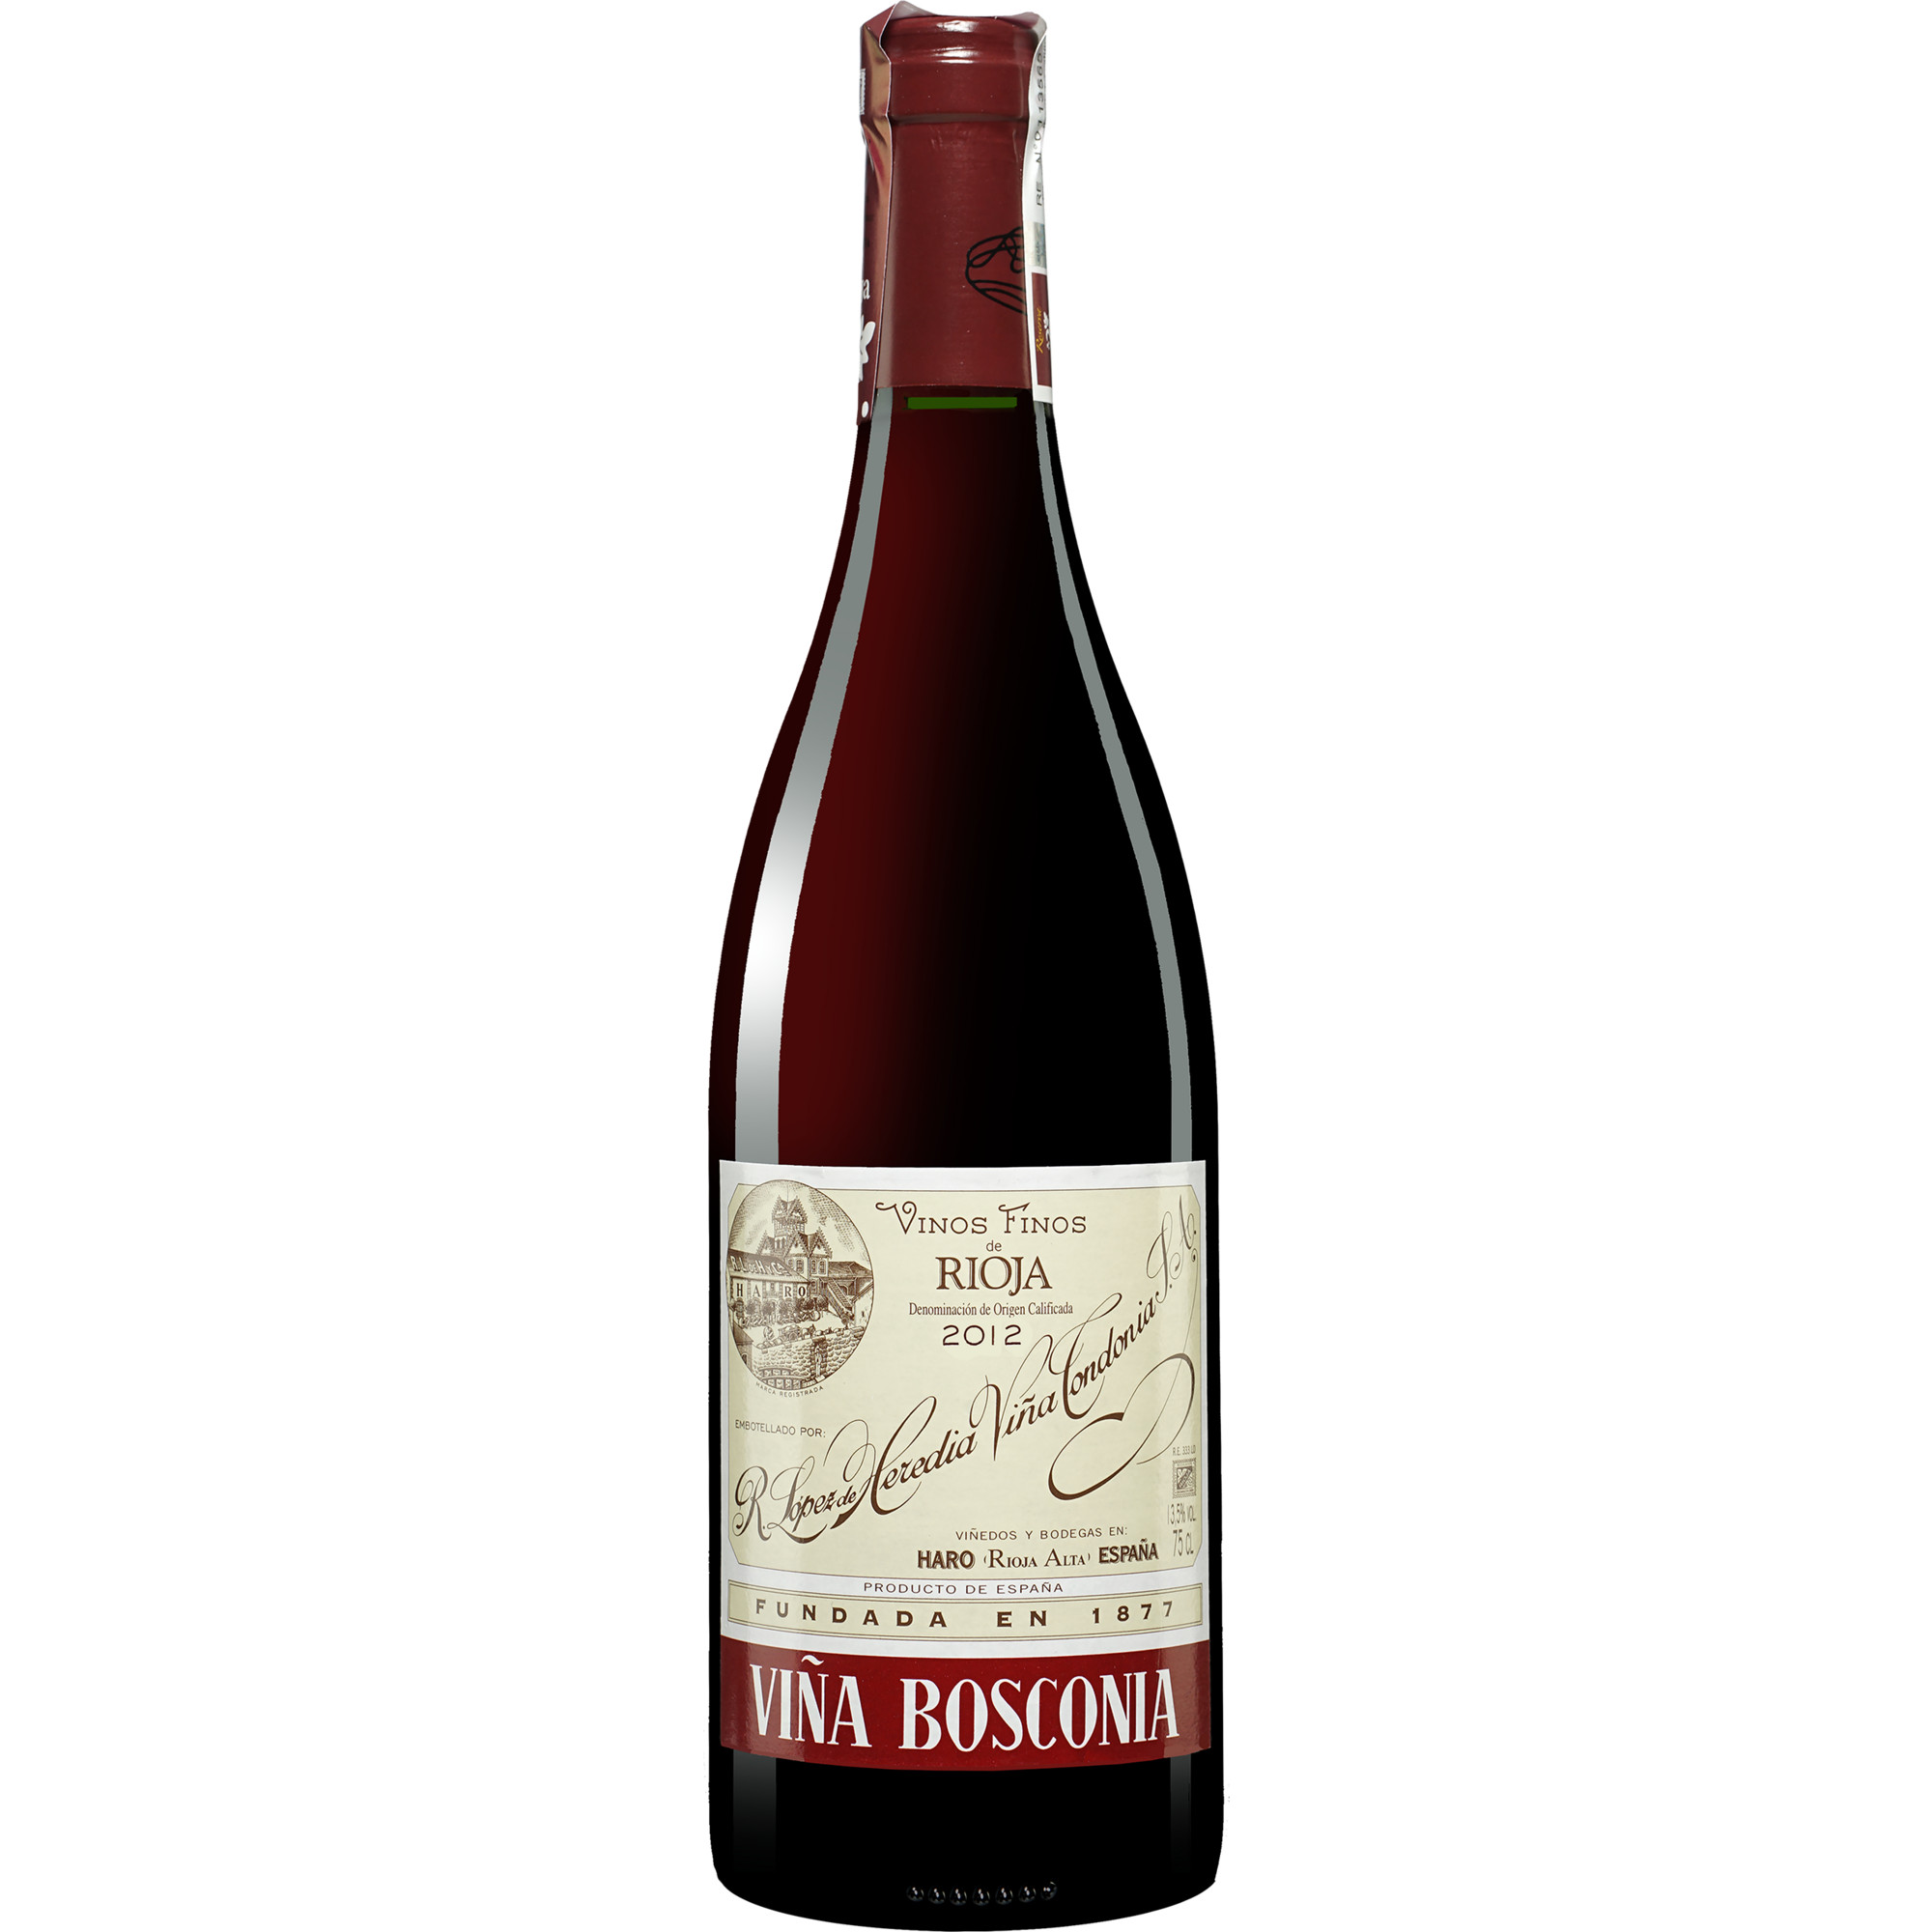 Tondonia »Viña Bosconia« Tinto Reserva 2012  013.5% Vol. Rotwein Trocken aus Spanien